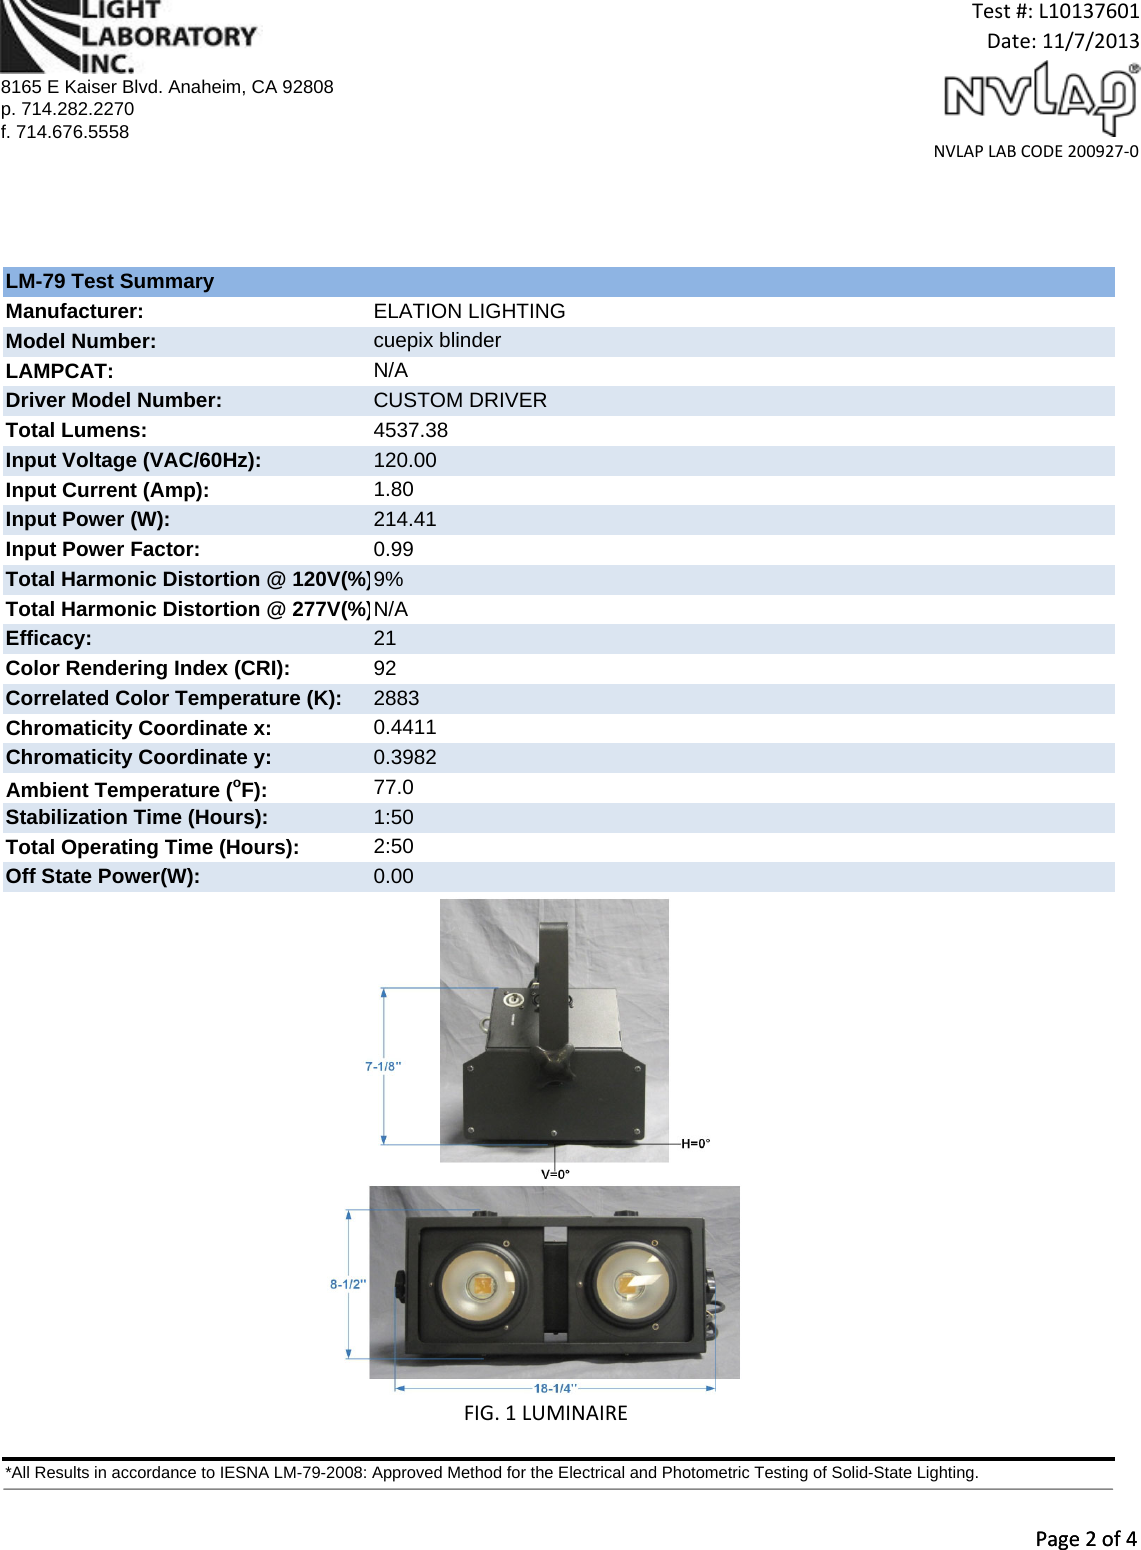 Page 2 of 8 - Elation Cuepix Blinder Ww2 Photometric  Report Tool_FloodReportPE User Manual